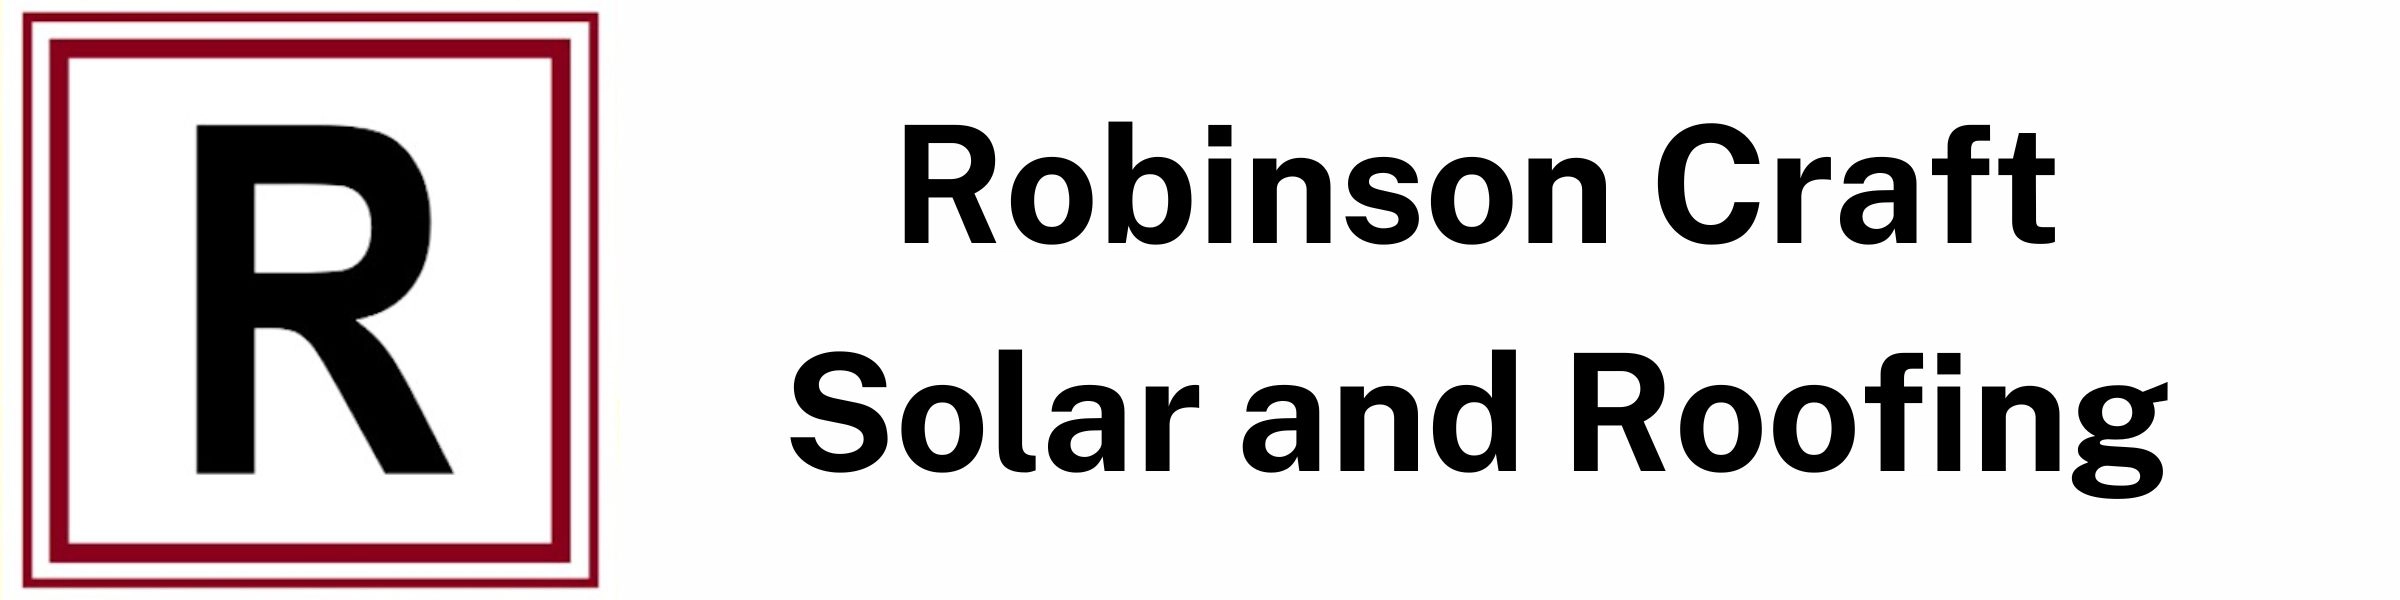 Robinson Craft Solar & Roofing Logo